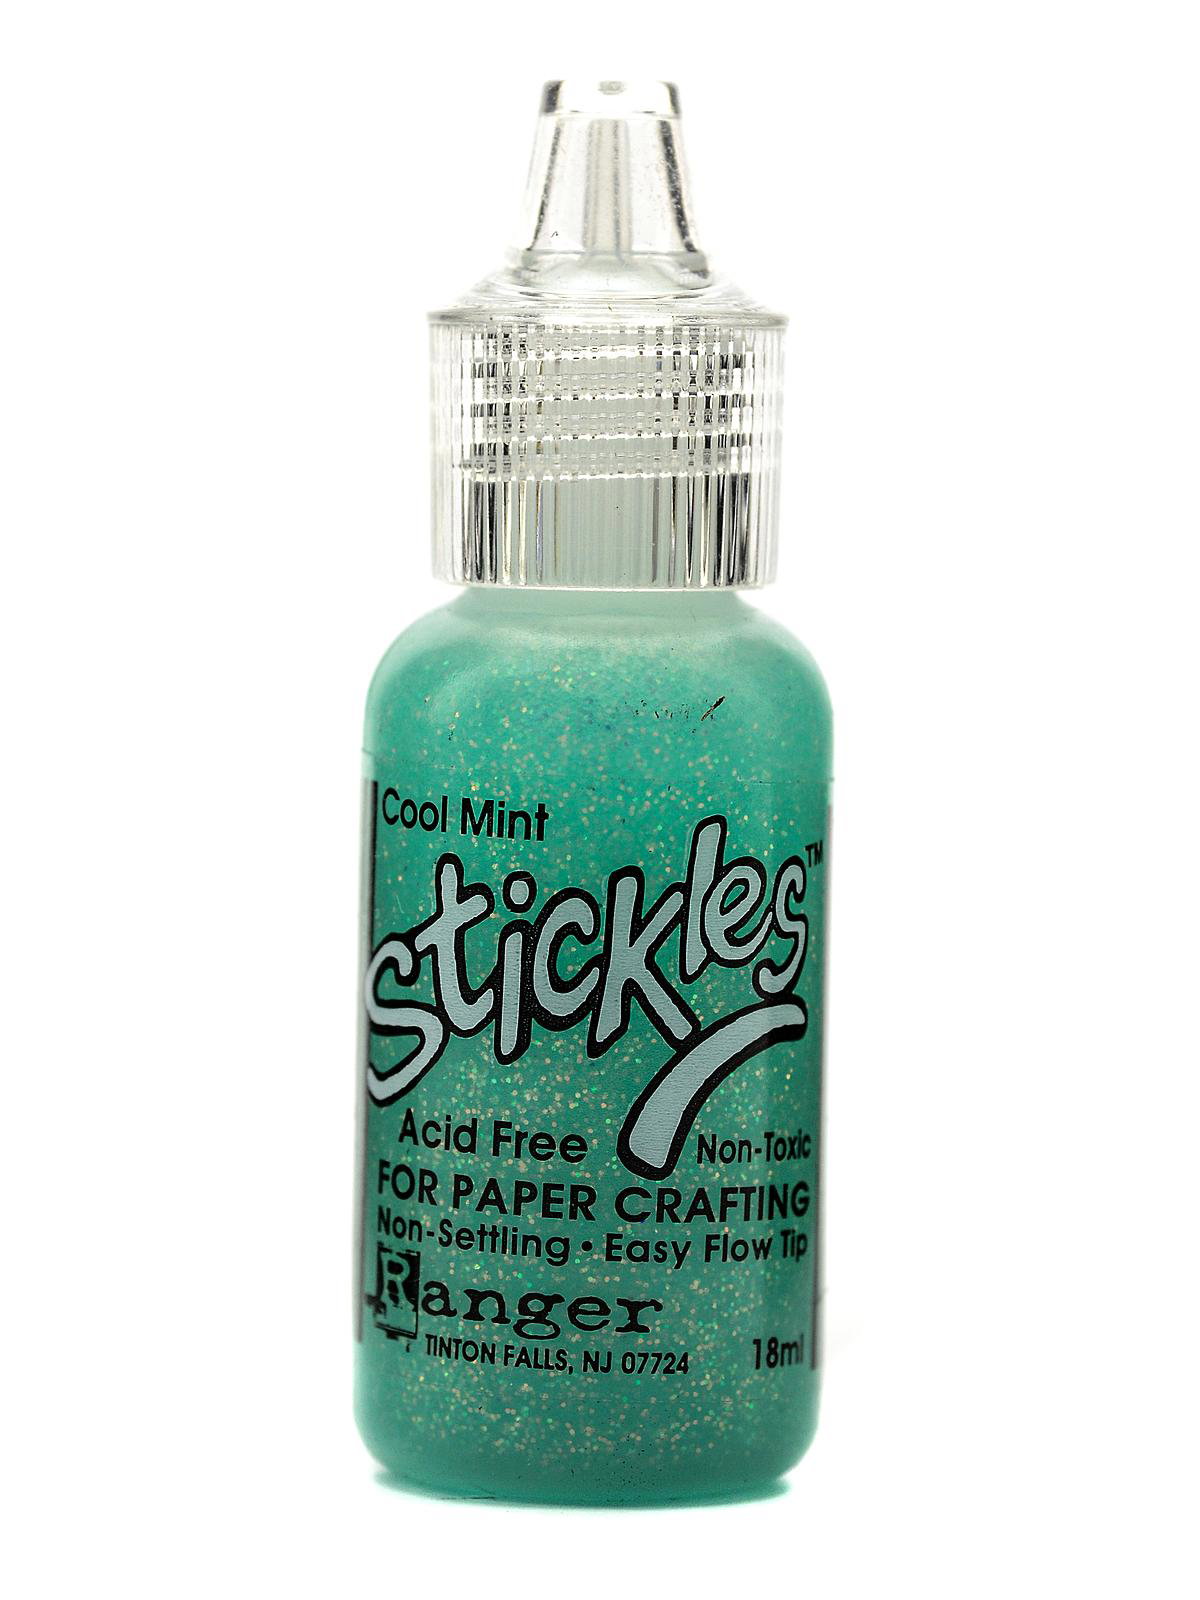 Stickles Glitter Glue cool mint, 0.5 oz., bottle